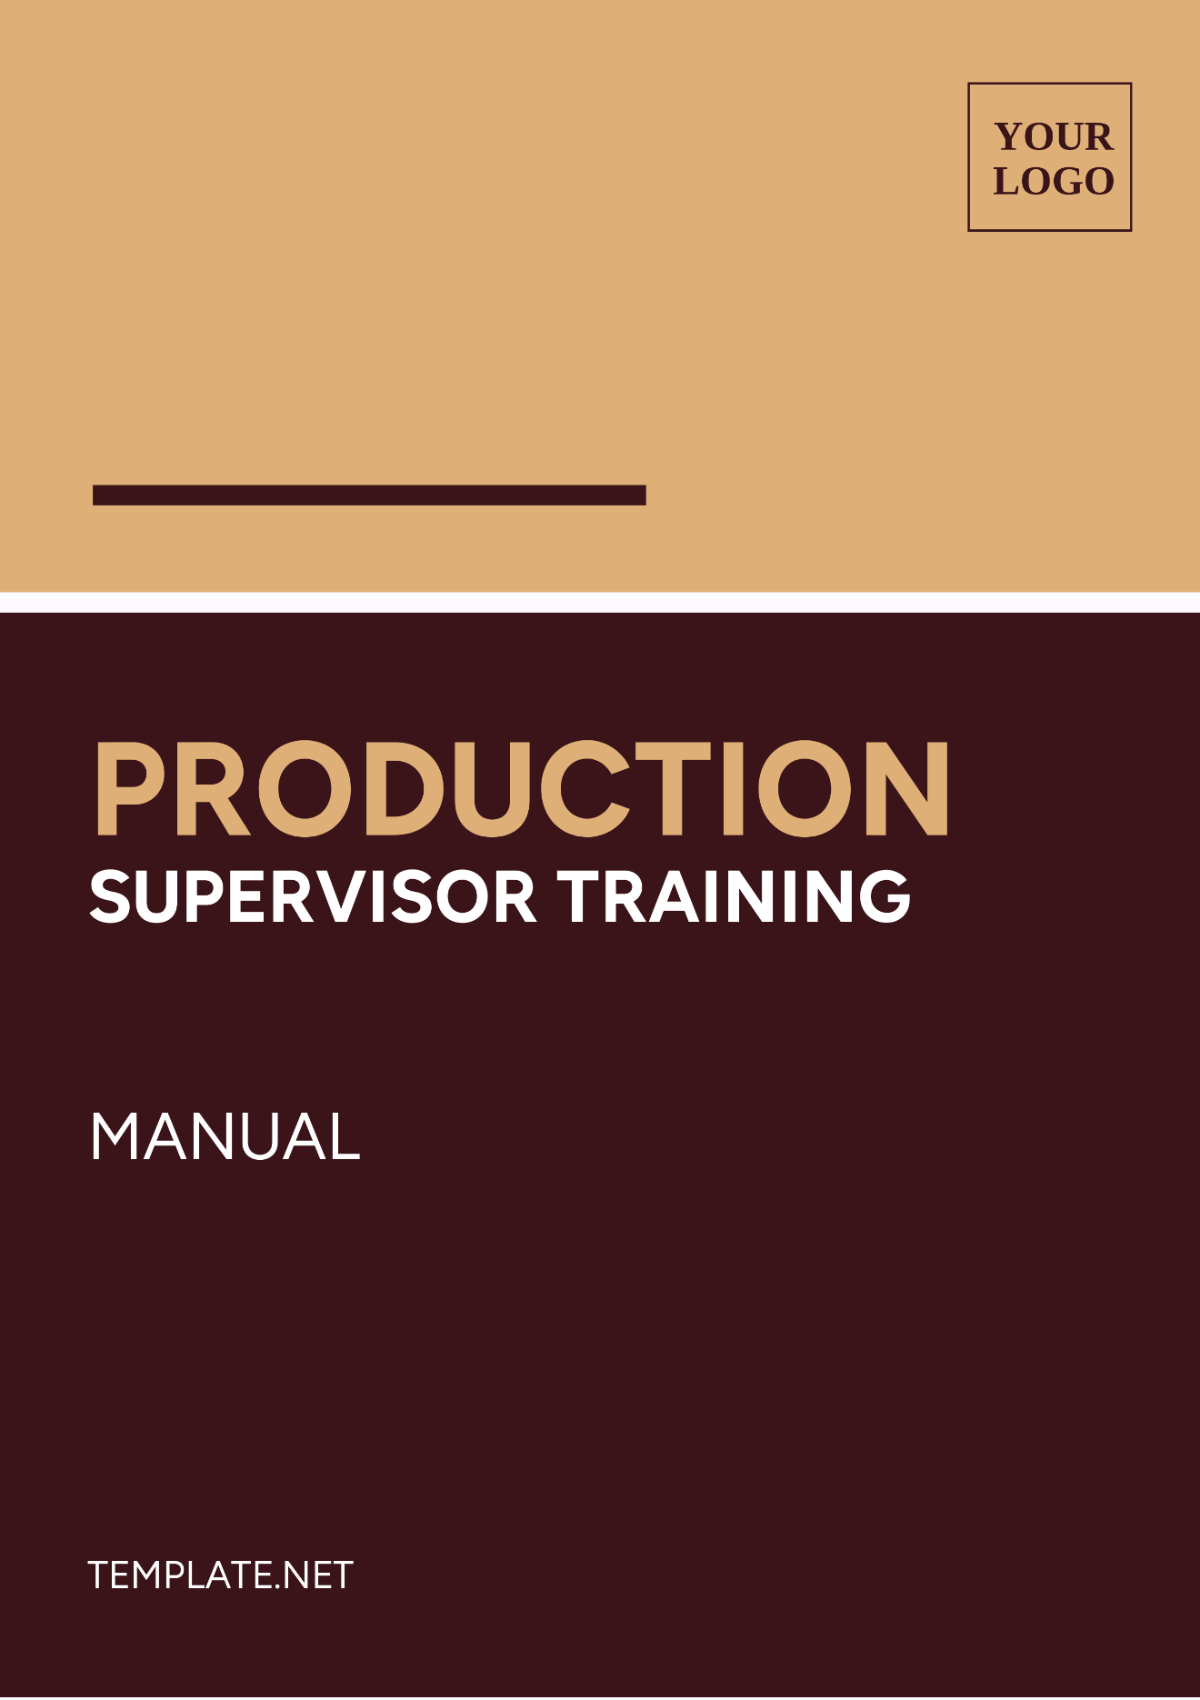 Free Production Supervisor Training Manual Template